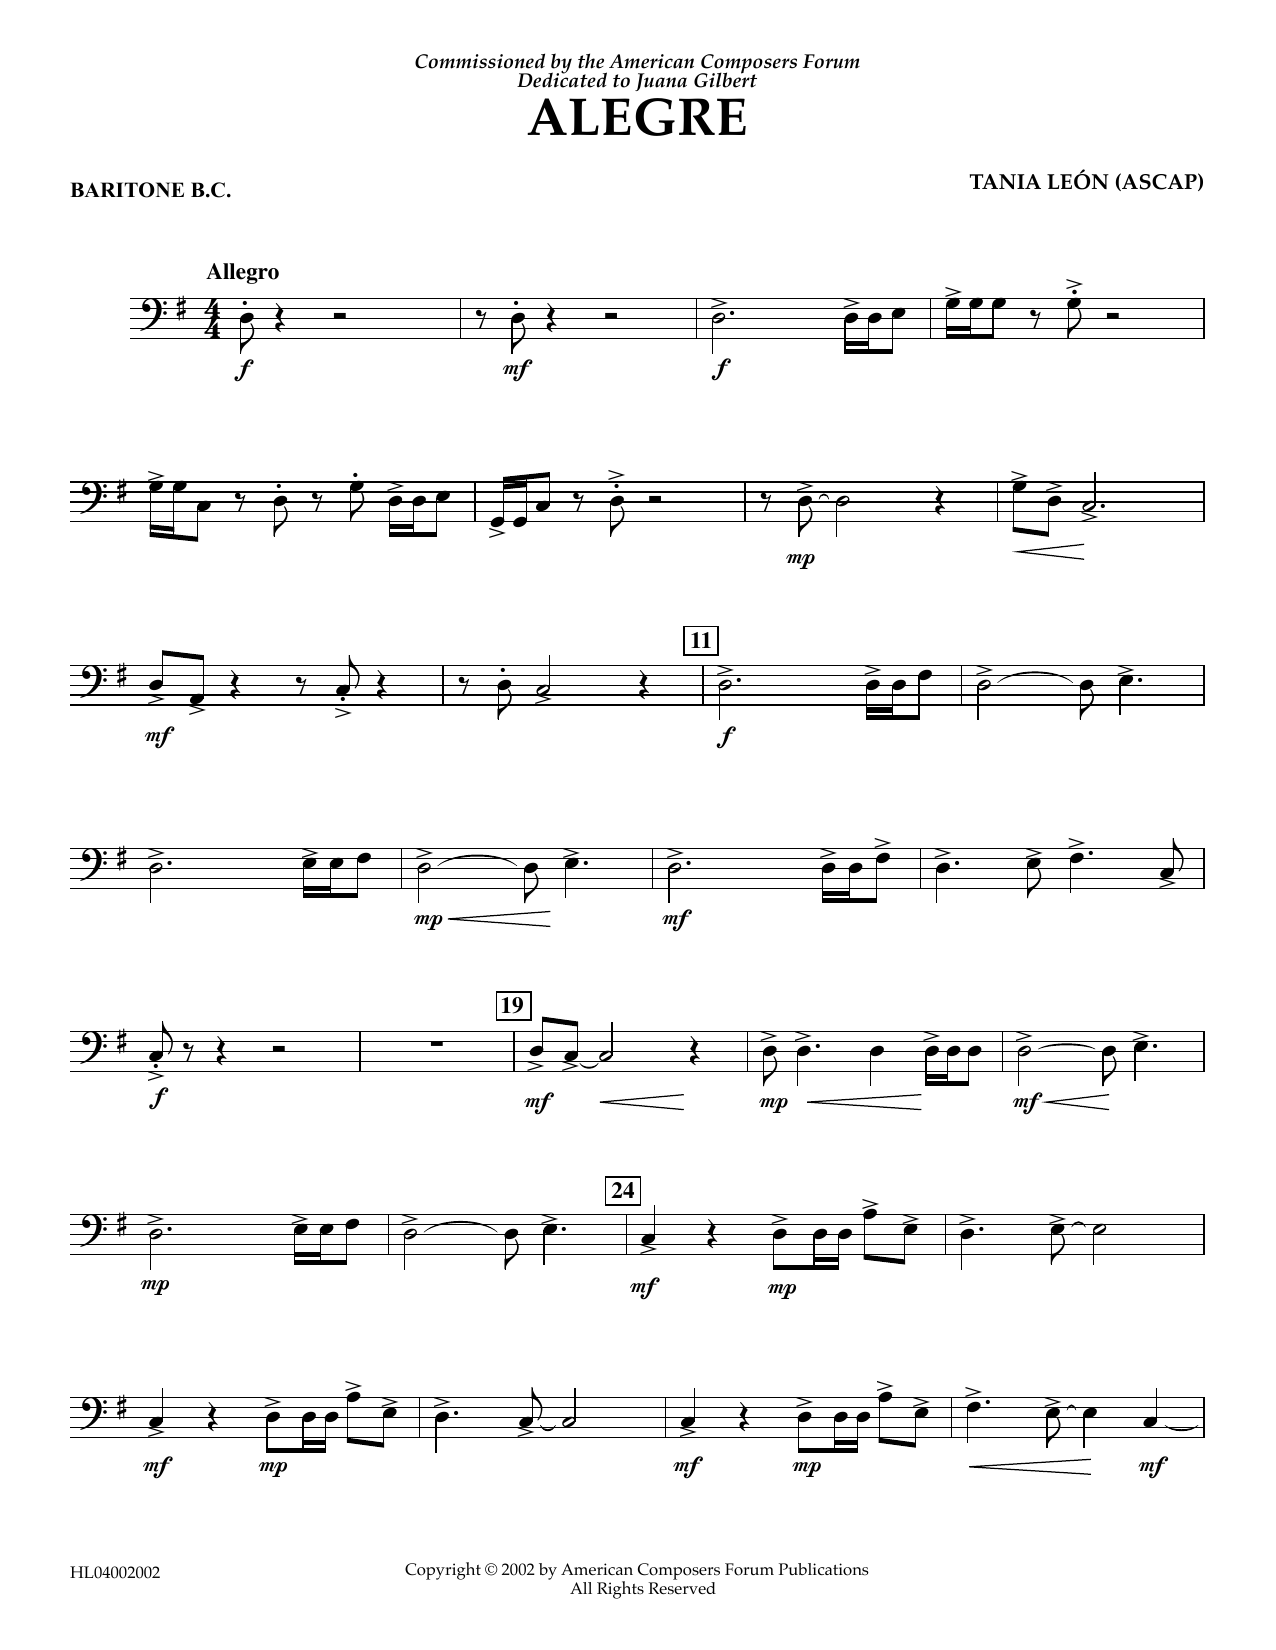 Tania Leon Alegre - Baritone B.C. Sheet Music Notes & Chords for Concert Band - Download or Print PDF